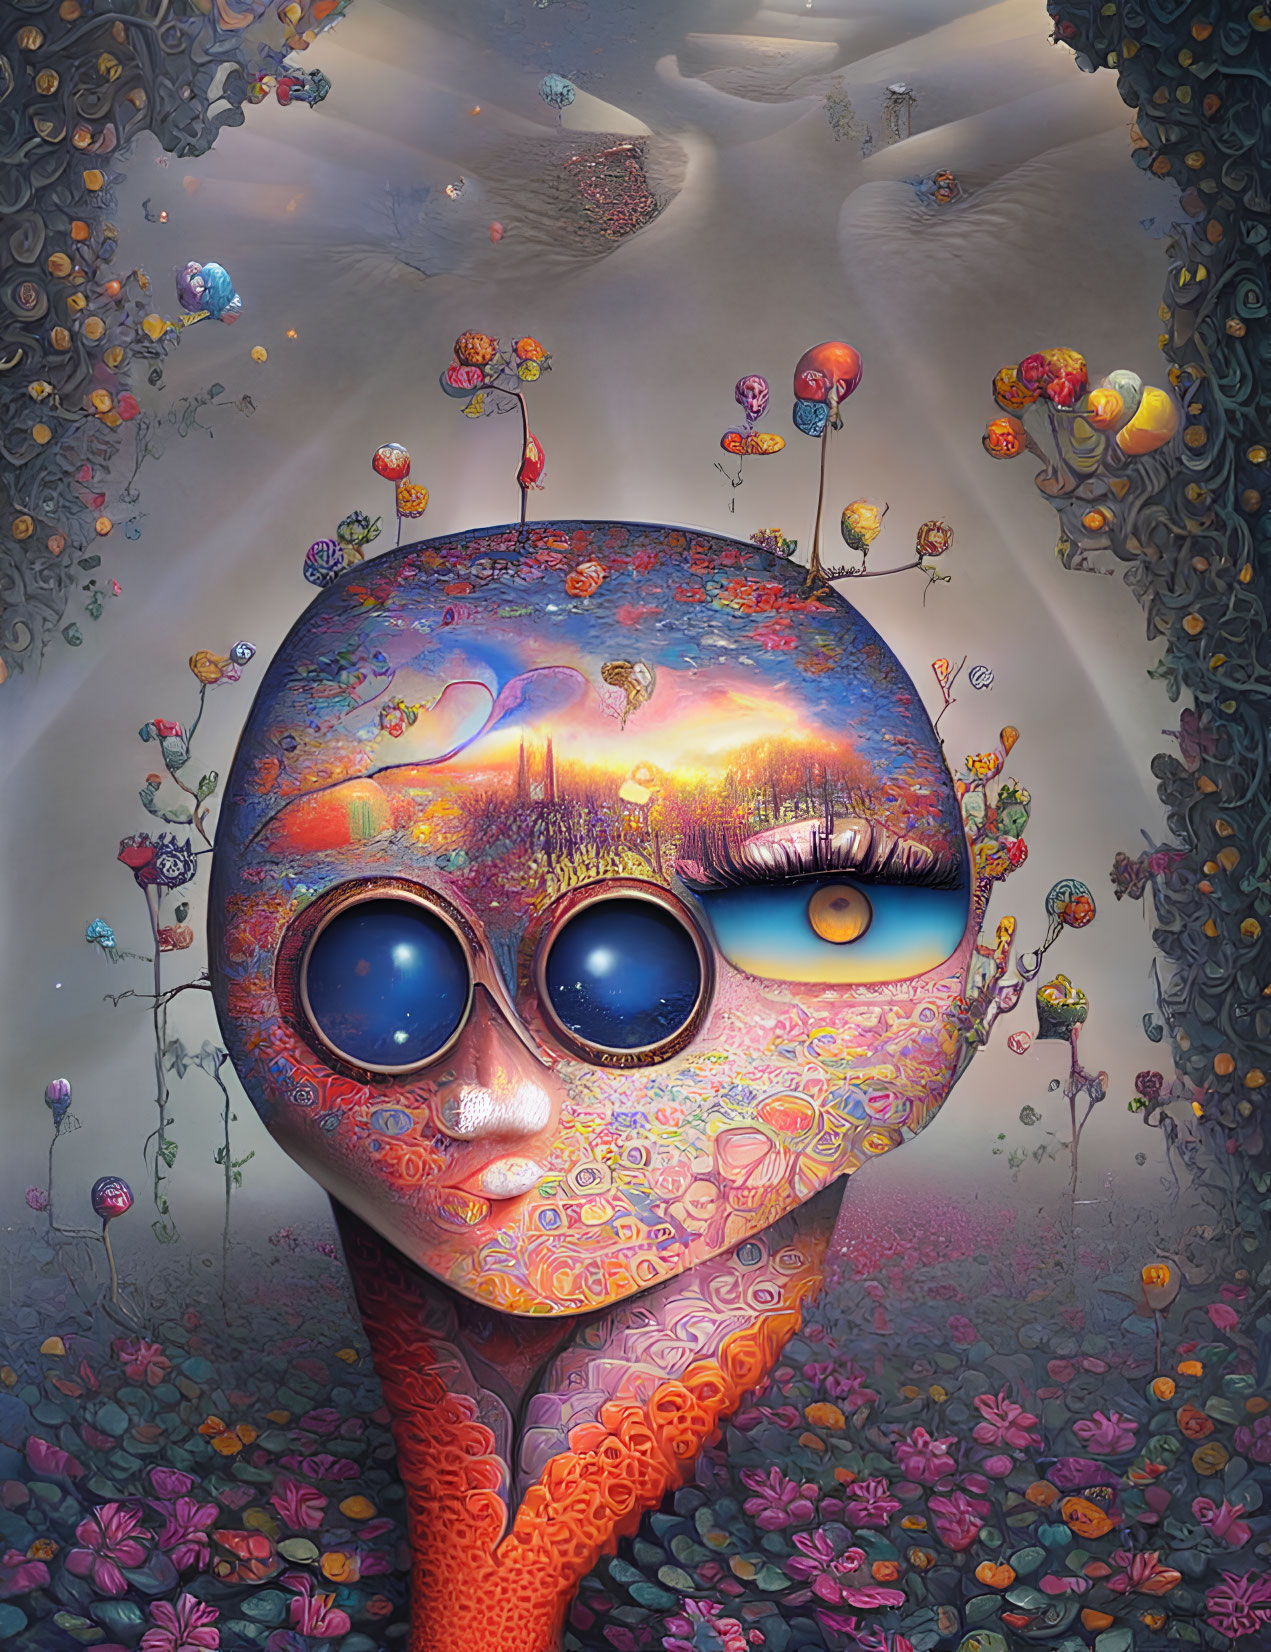 Colorful surreal portrait of alien-like figure in vibrant scenery